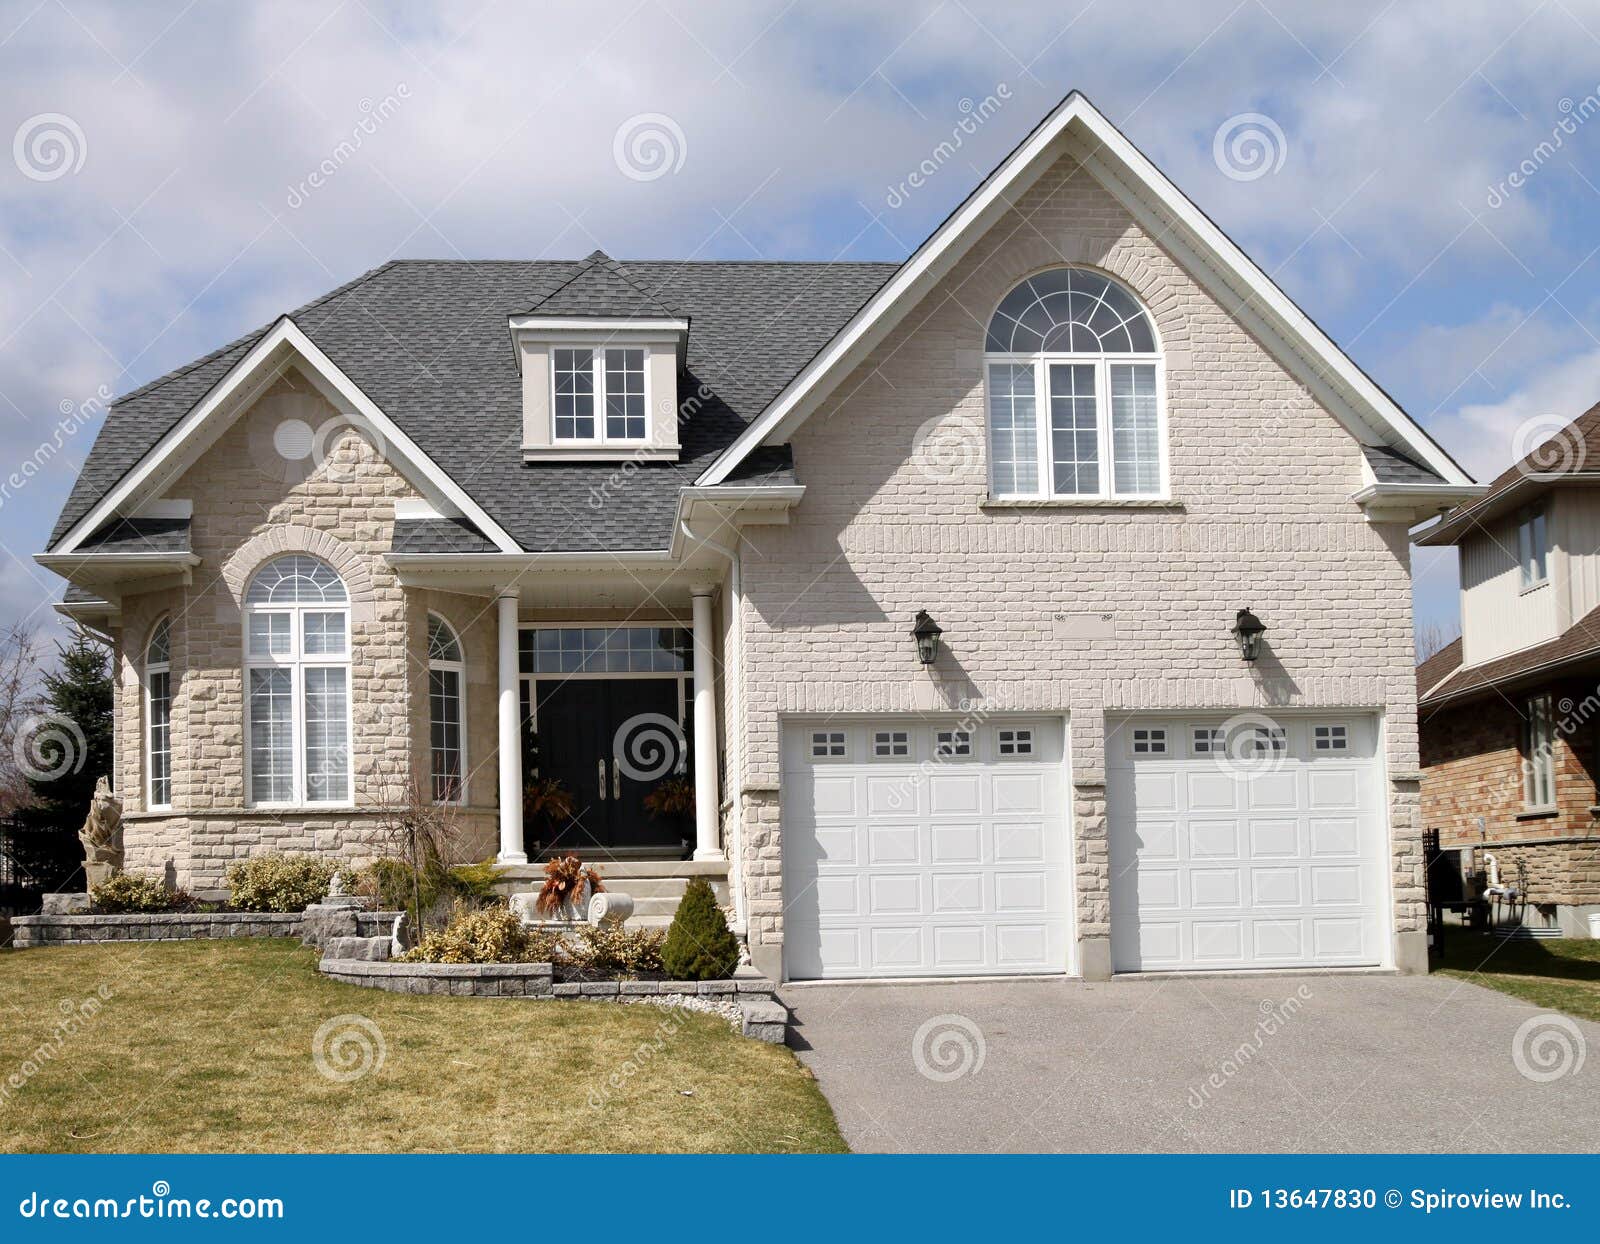 large-suburban-house-13647830.jpg